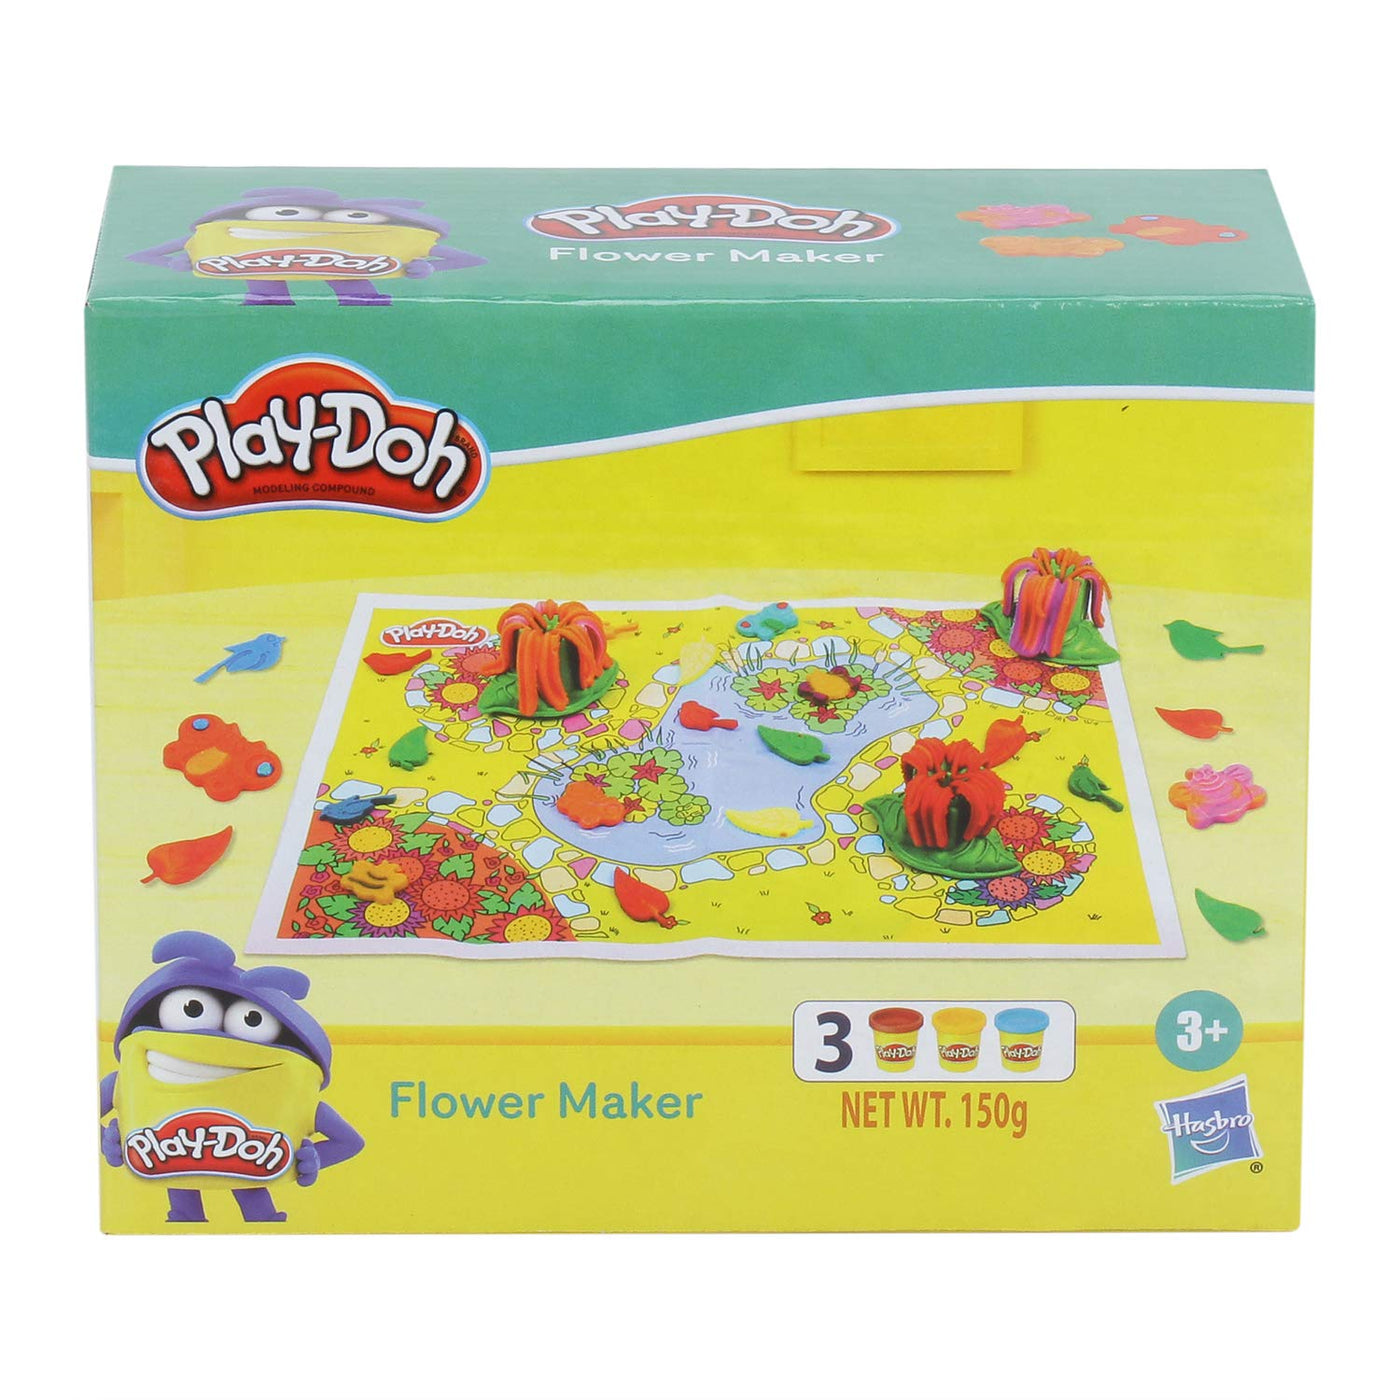 Flower Maker - Play Doh | Hasbro